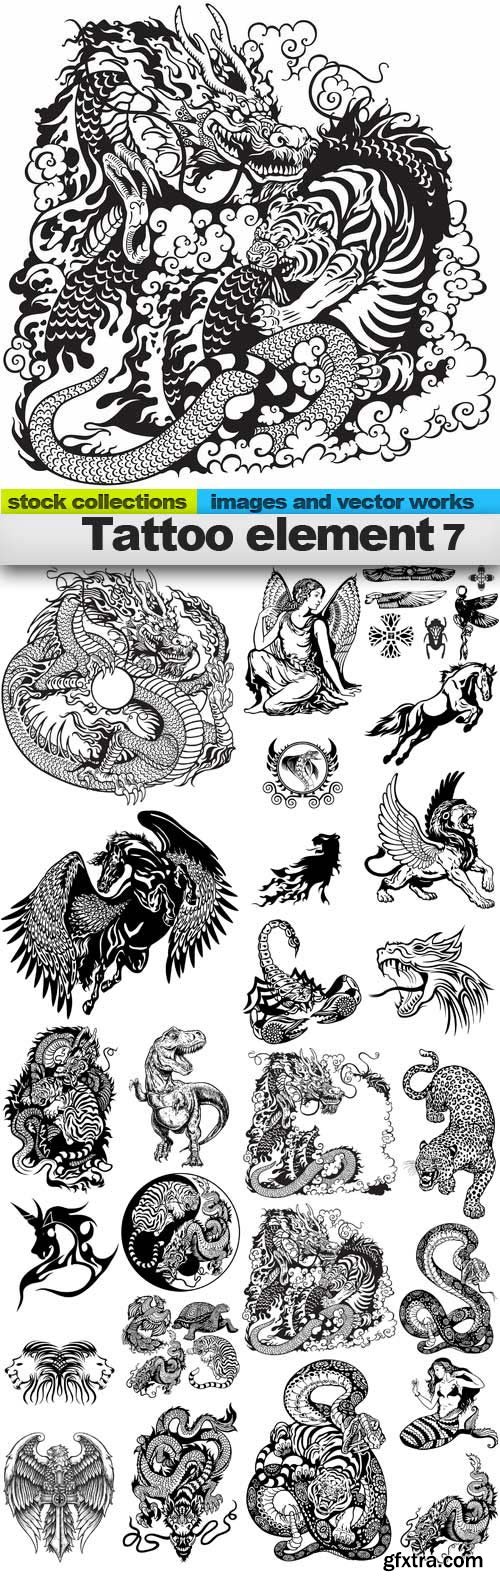 Tattoo element 7, 25 x EPS